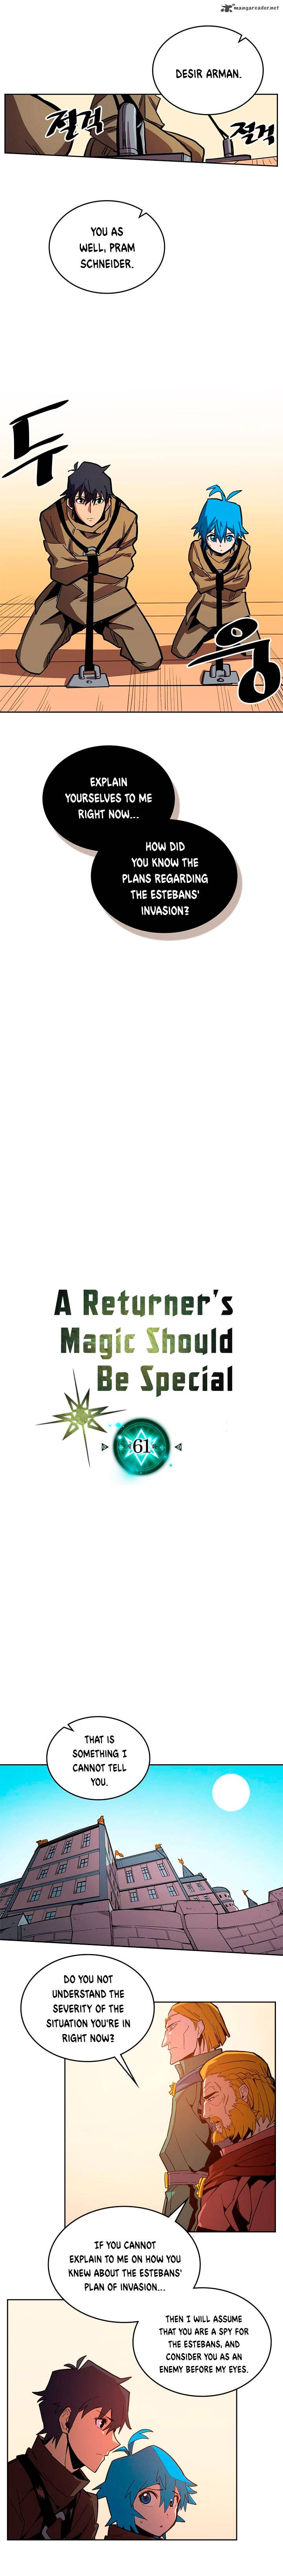 A Returners Magic Should Be Special 61 2